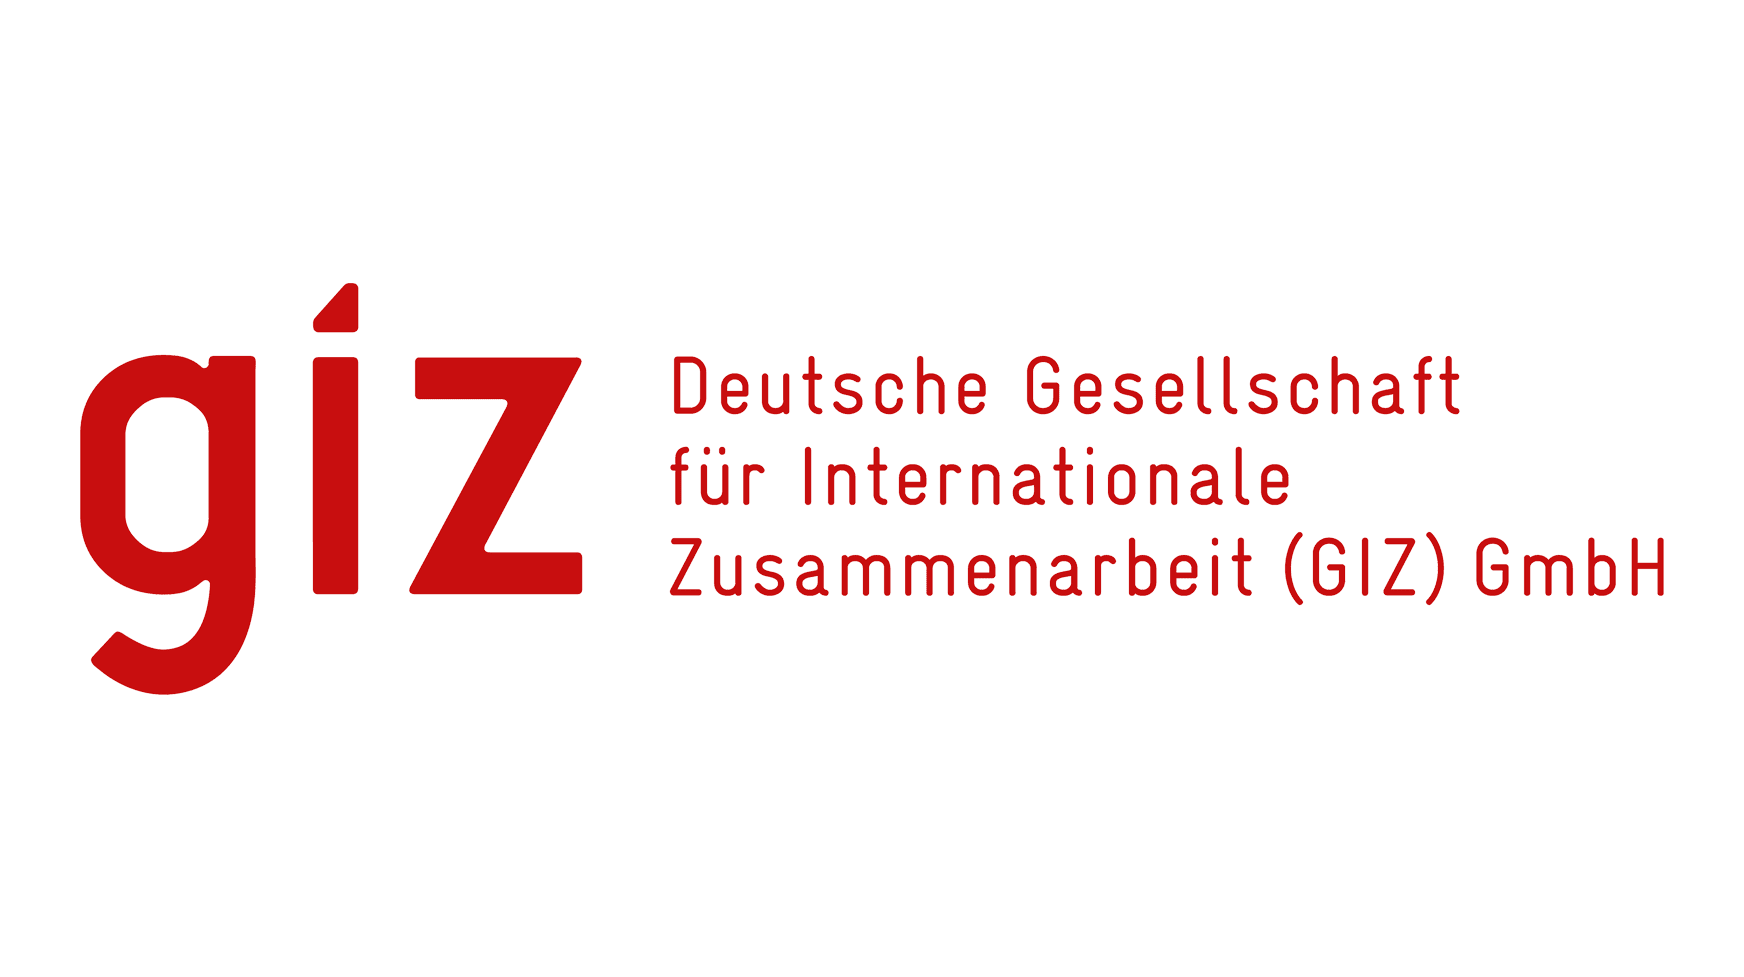 The German Corporation for International Cooperation GmbH Logo